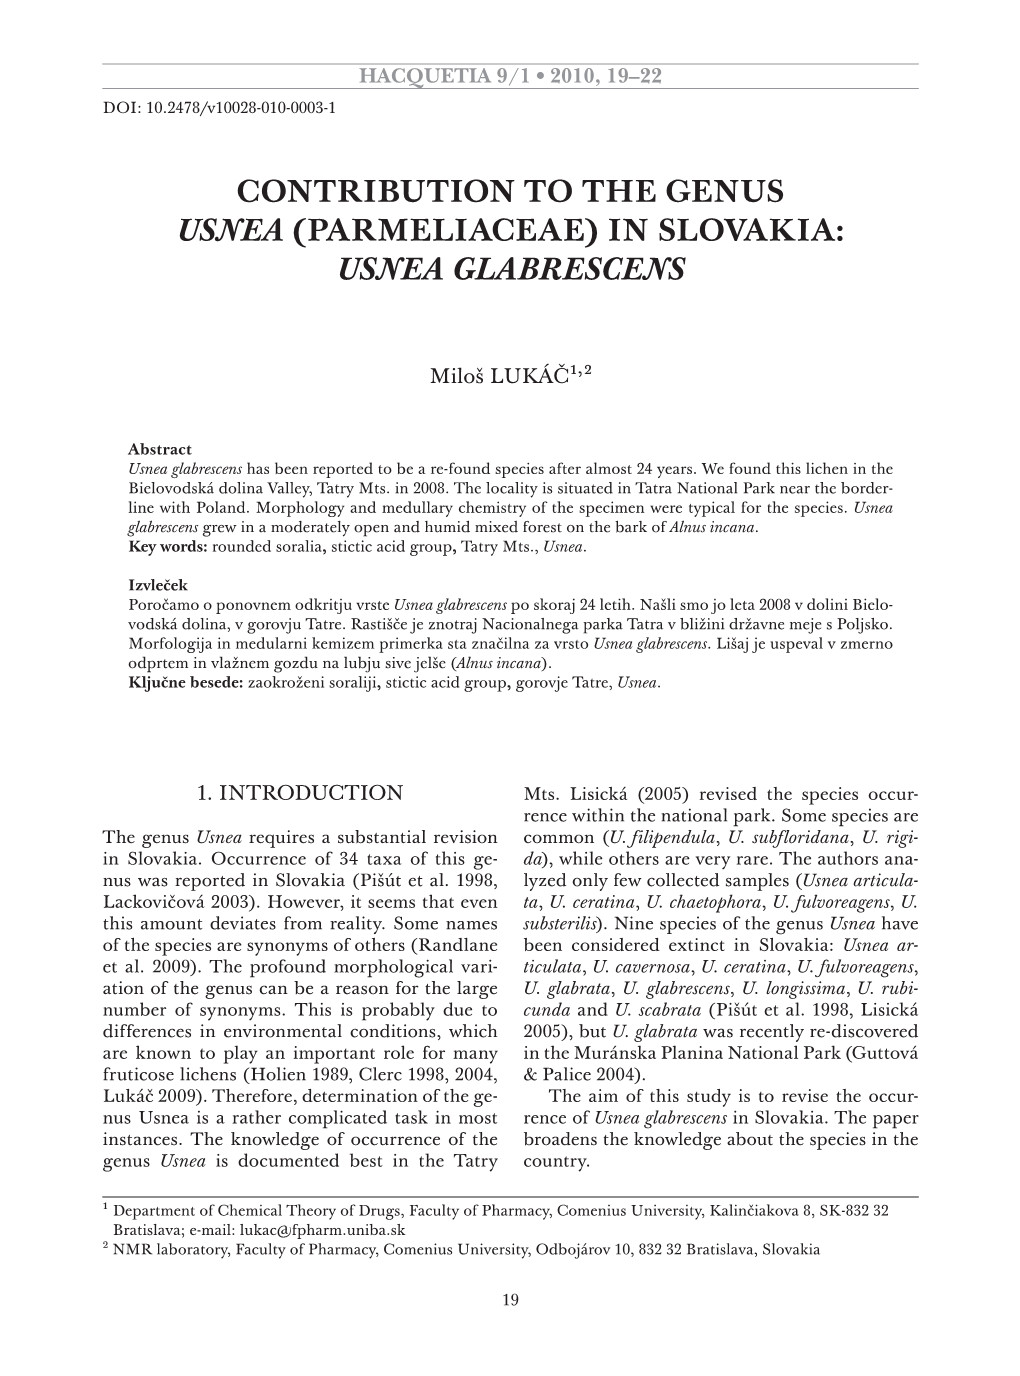 Contribution to the Genus Usnea (Parmeliaceae) in Slovakia: Usnea Glabrescens